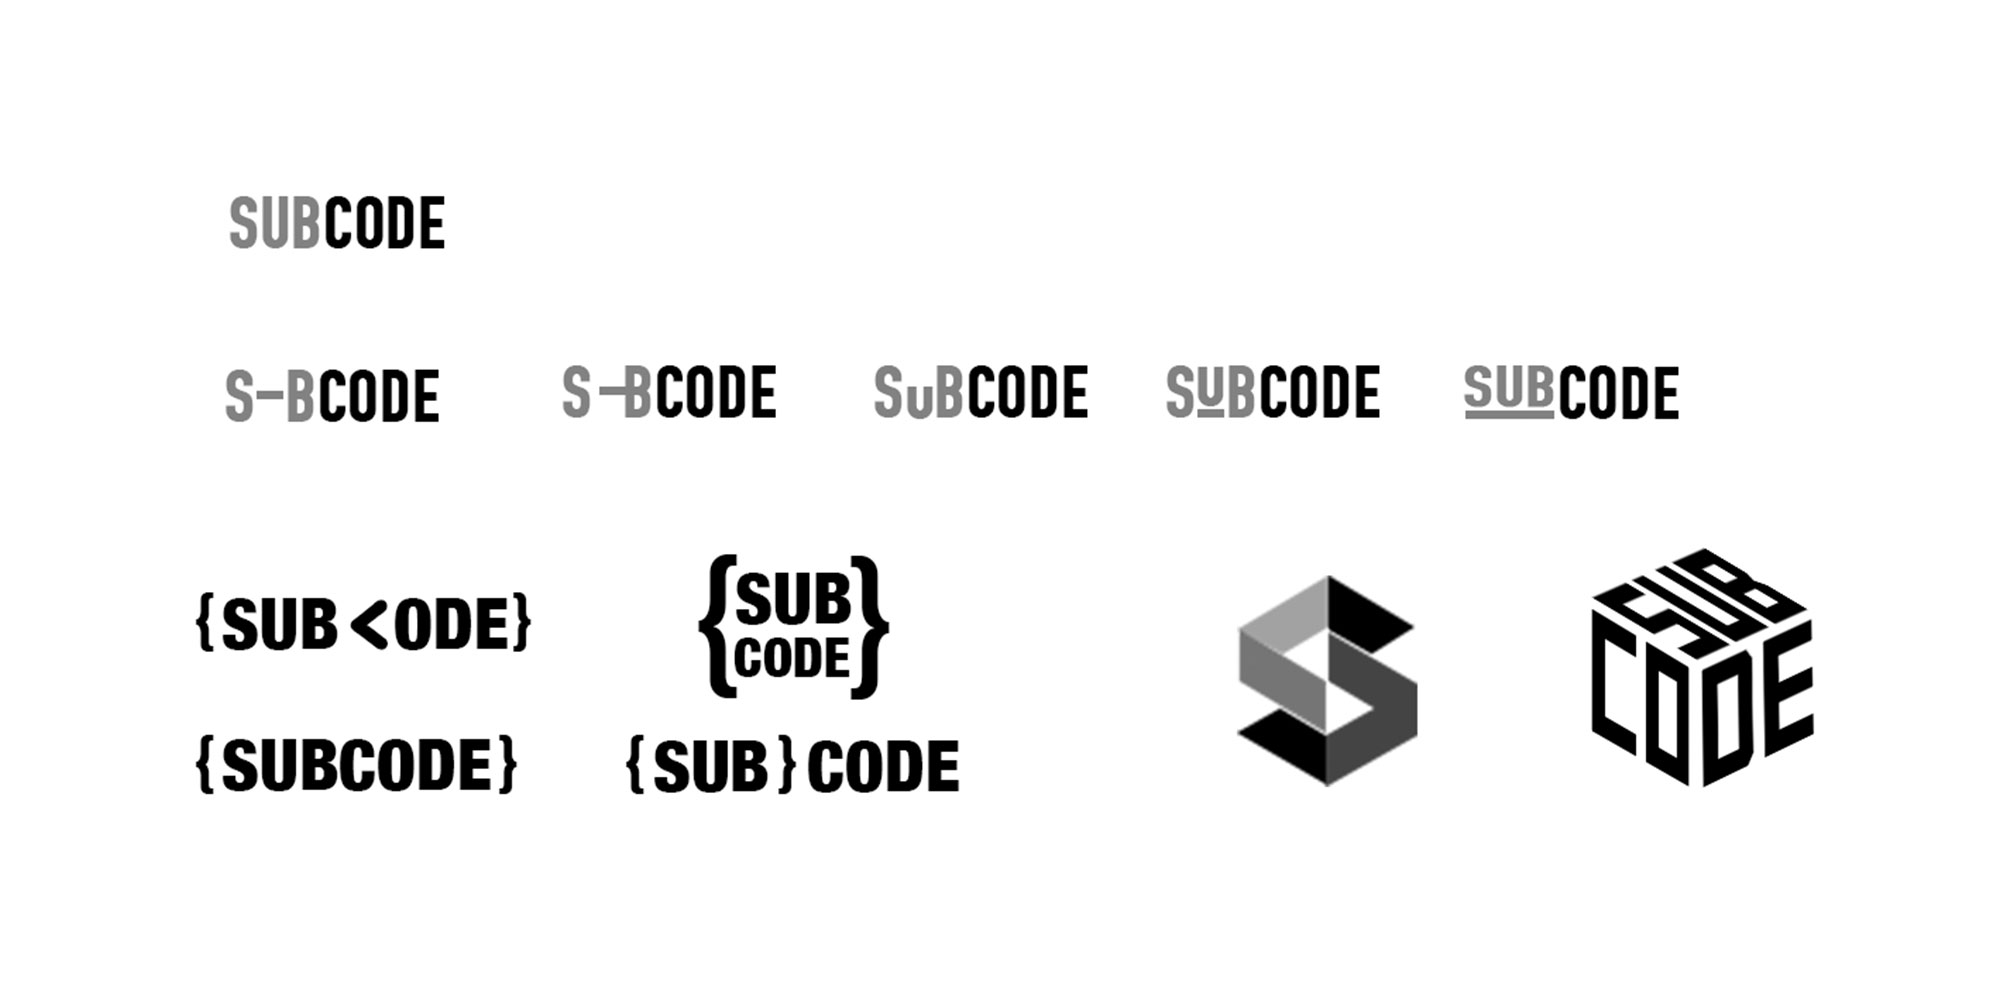 Subcode idea generation